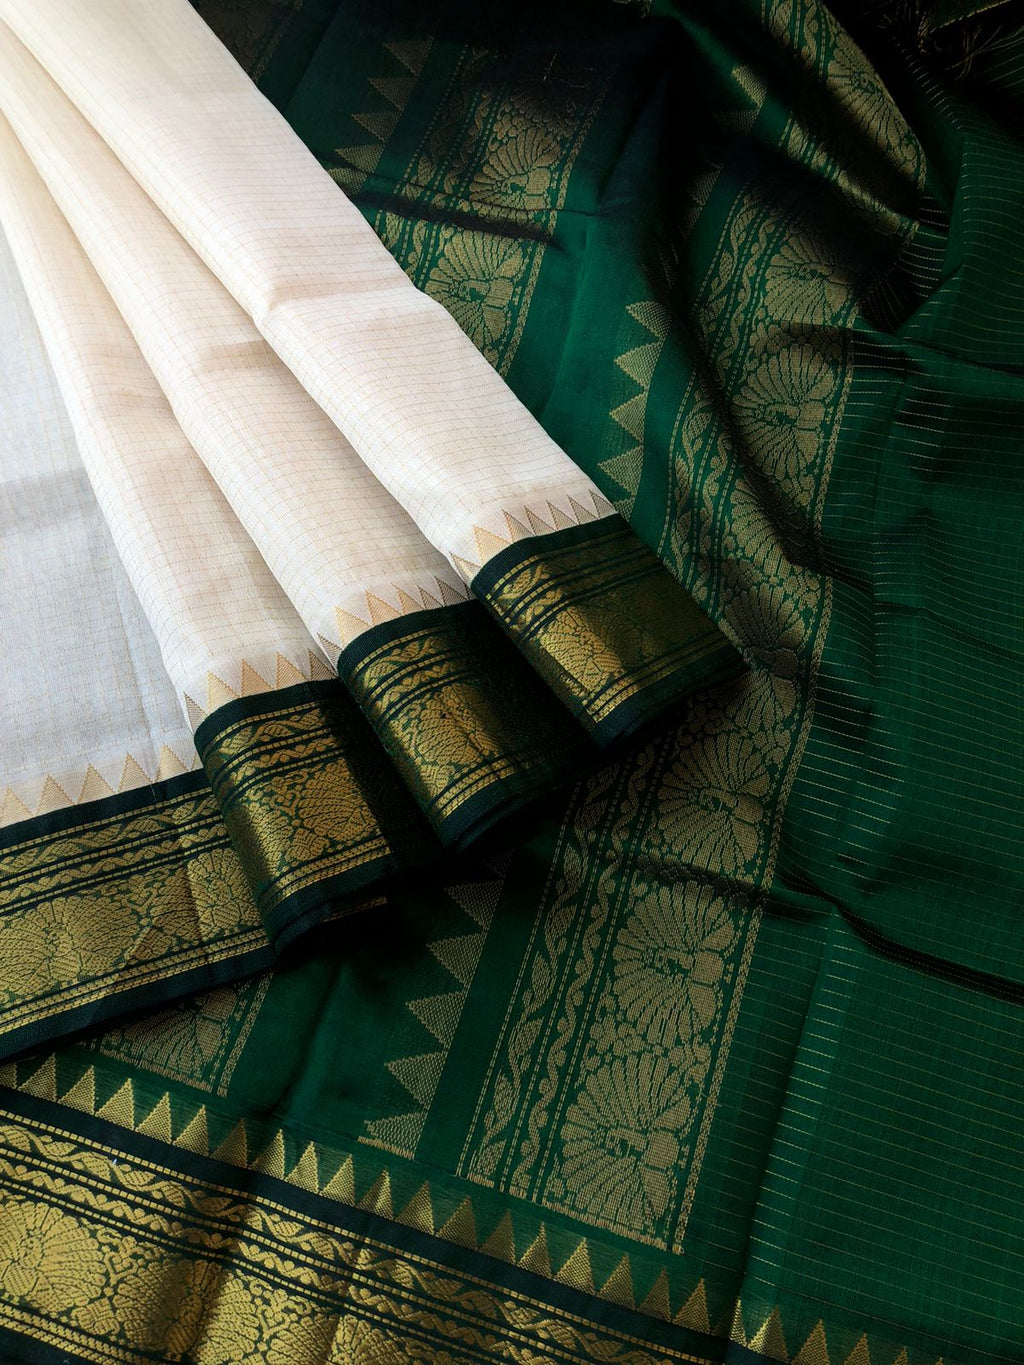 Korvai Silk Cottons - creamy off white and Meenakshi green zari kattam woven body